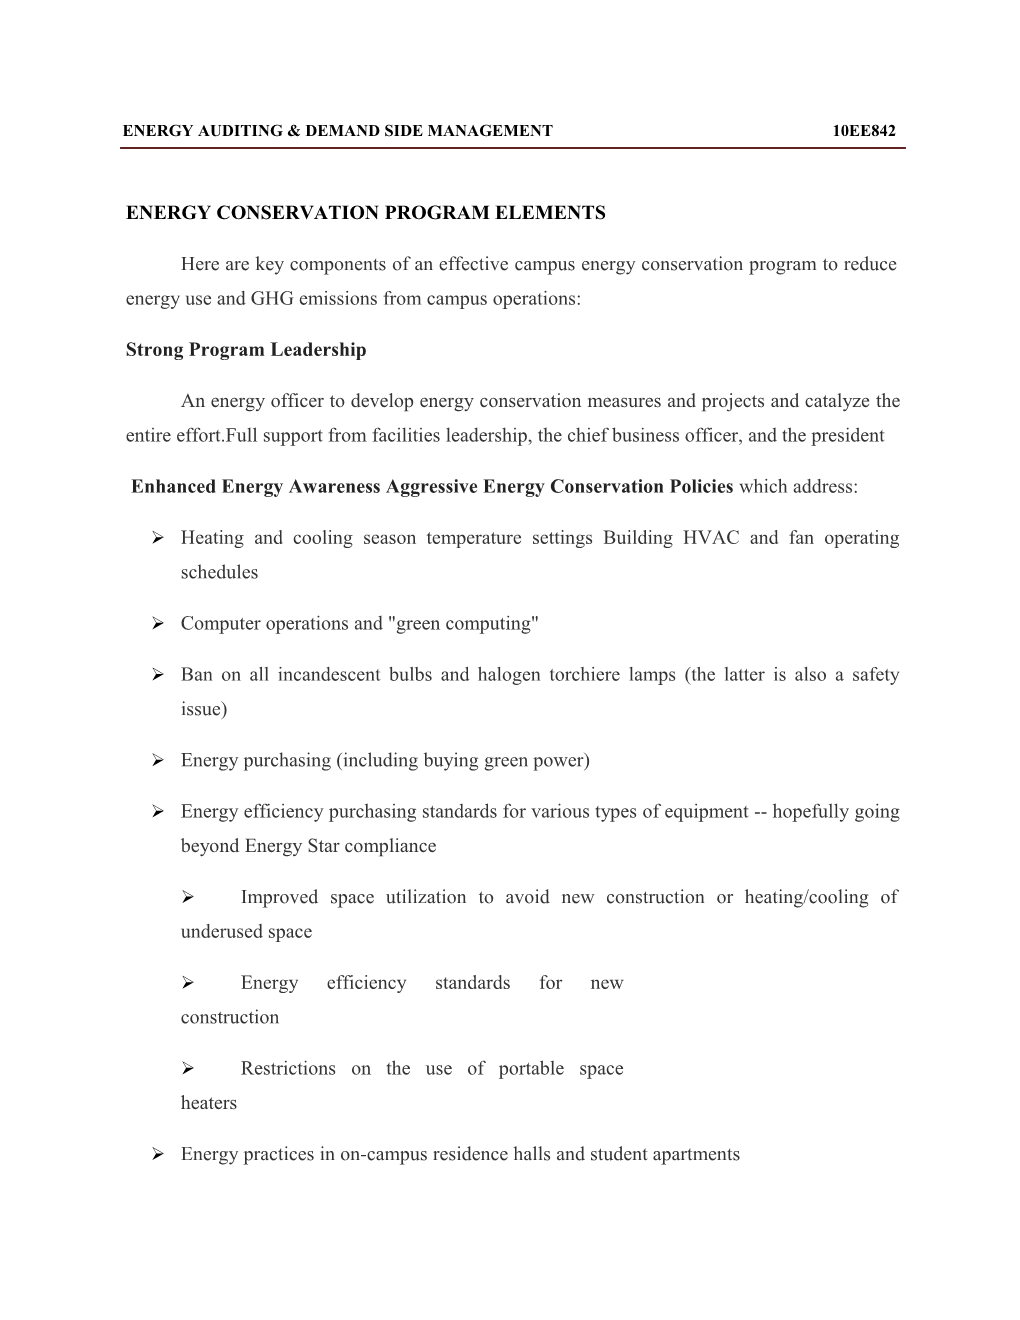 Energy Conservation Program Elements